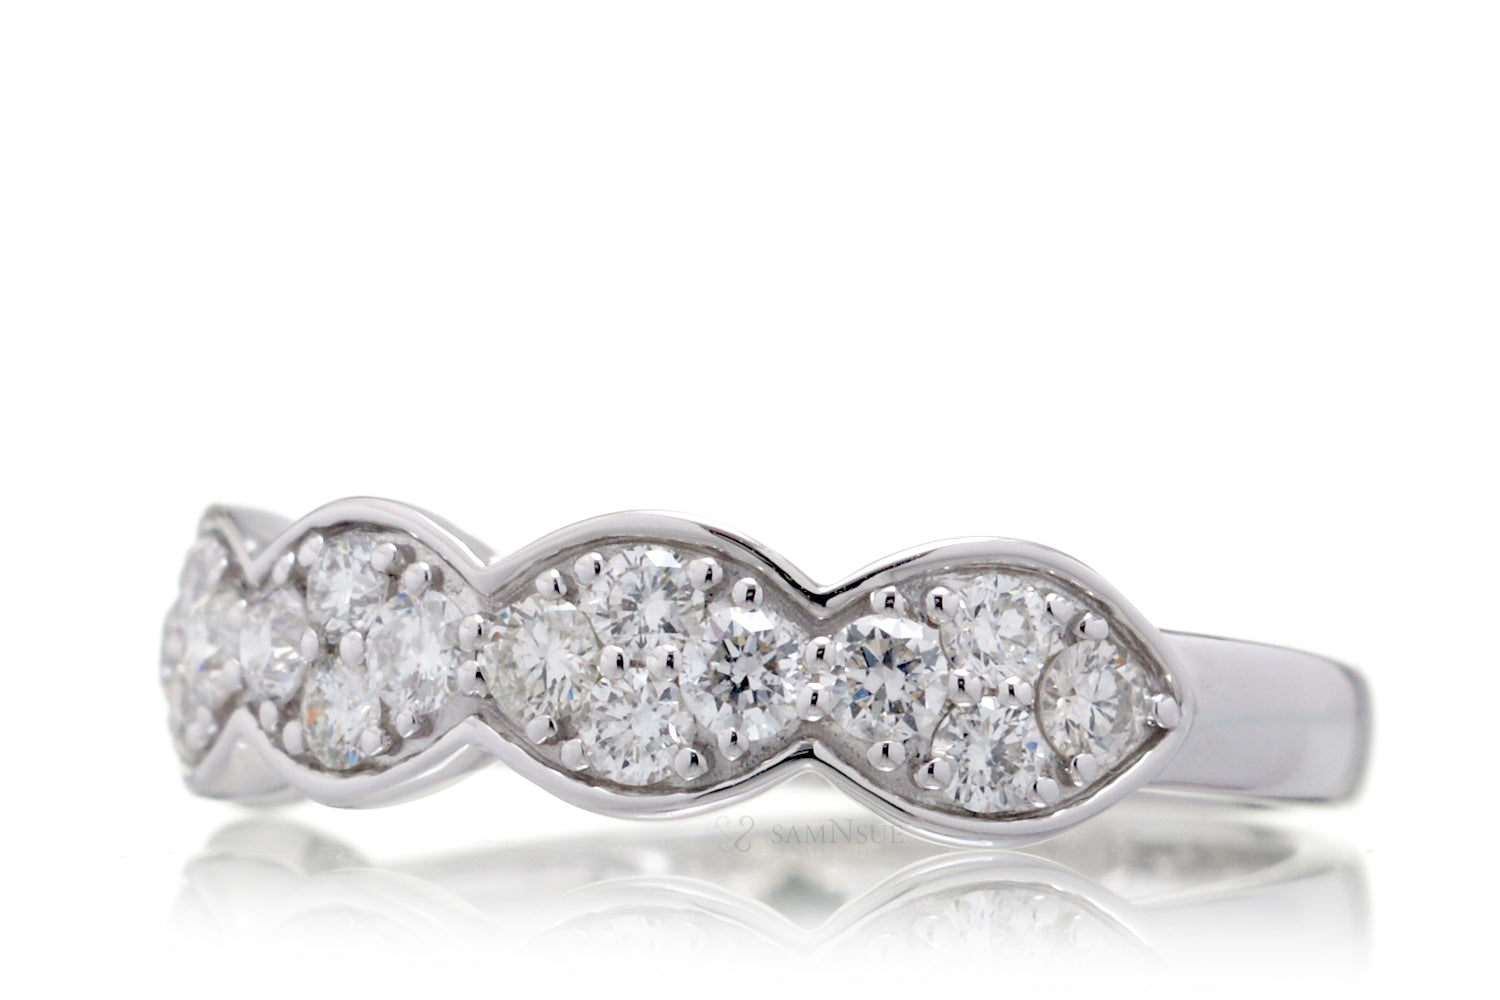 The Dianne Diamond Ring